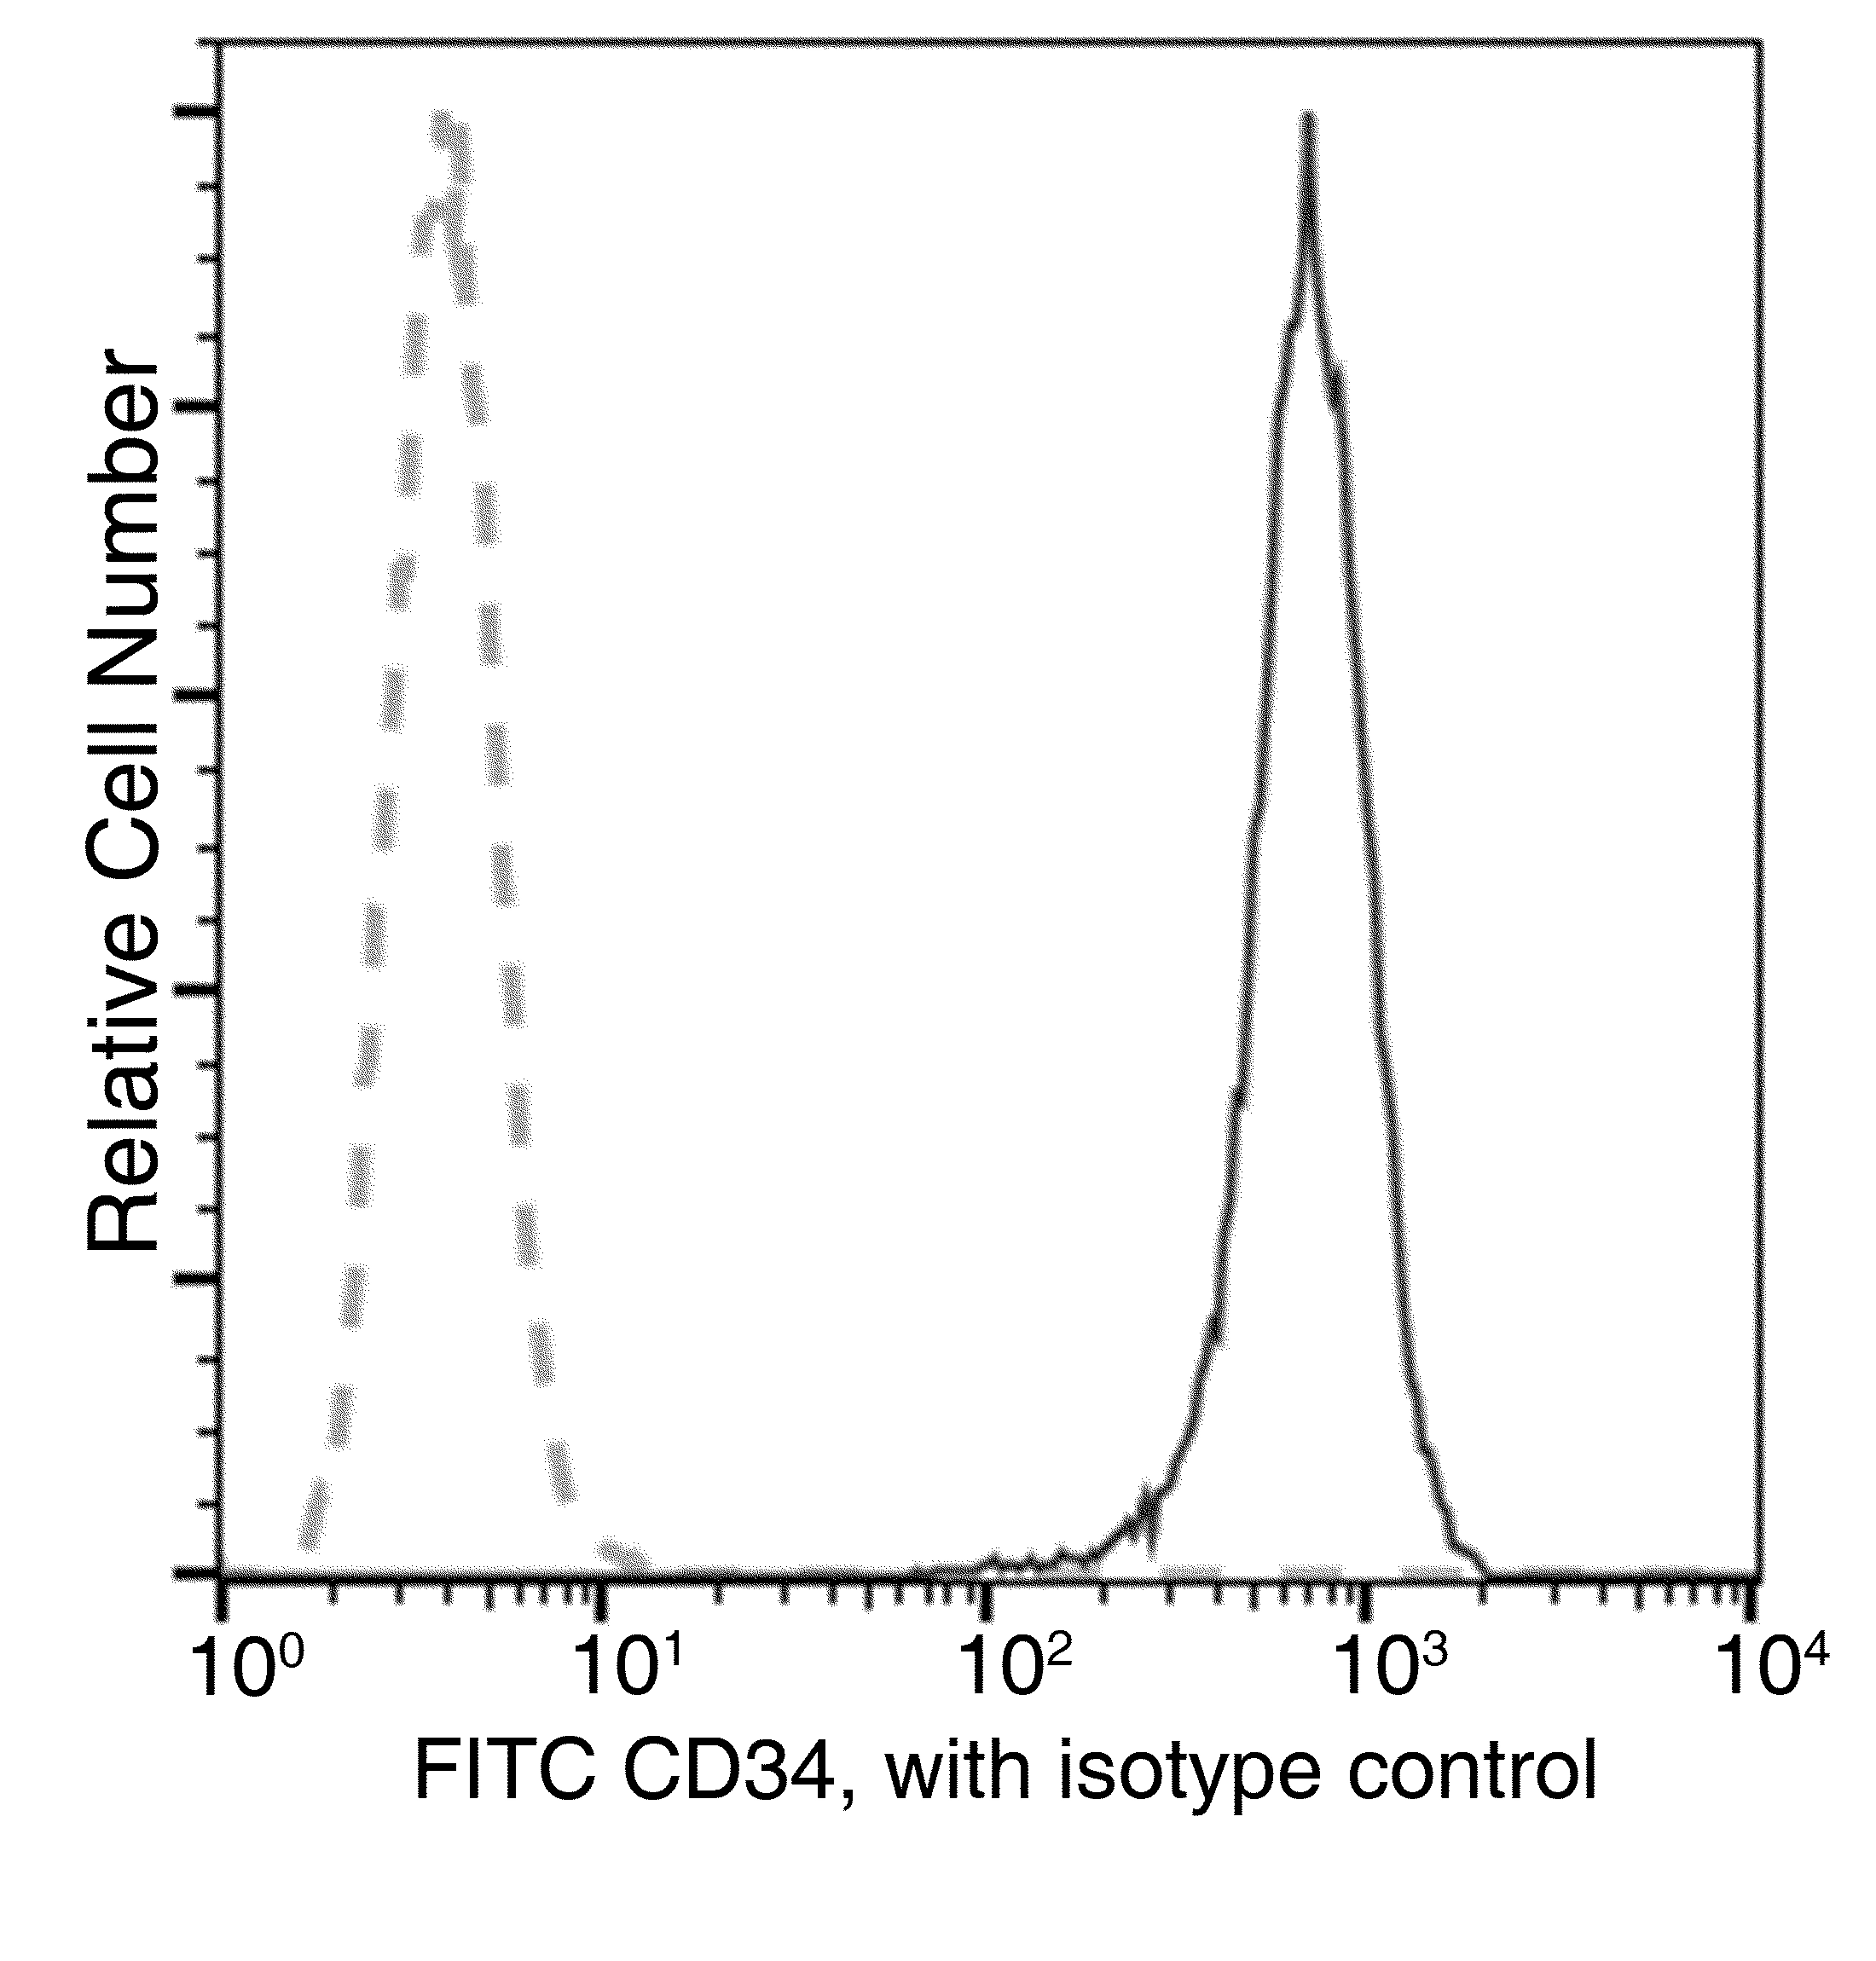 CD34 Antibody (FITC), Mouse Mab